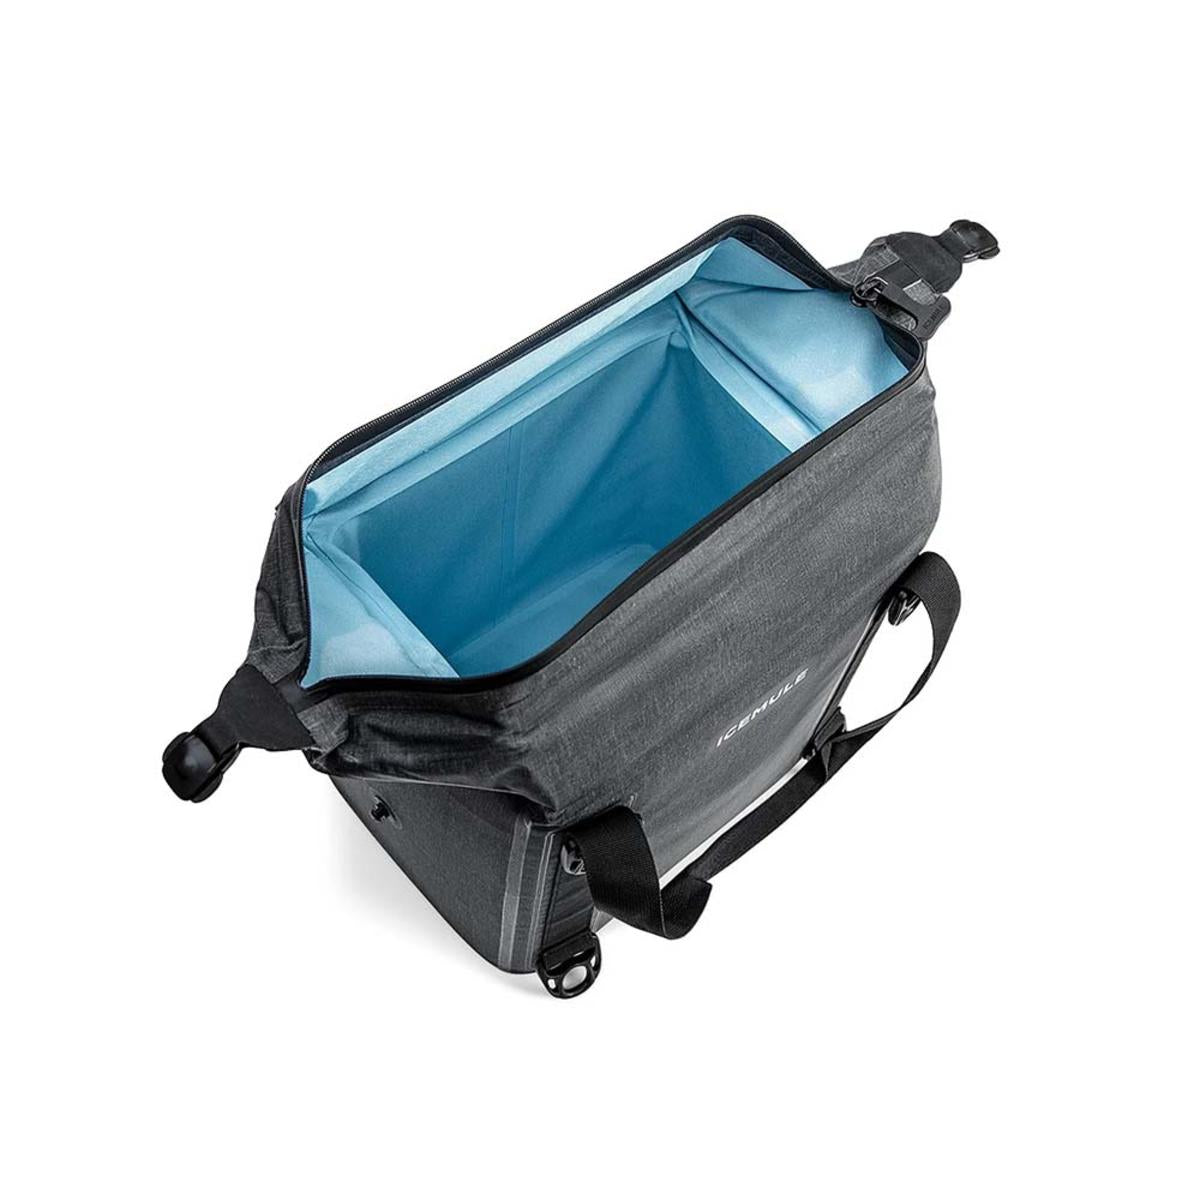 IceMule Traveler 25L Cooler Bag - Snow Grey